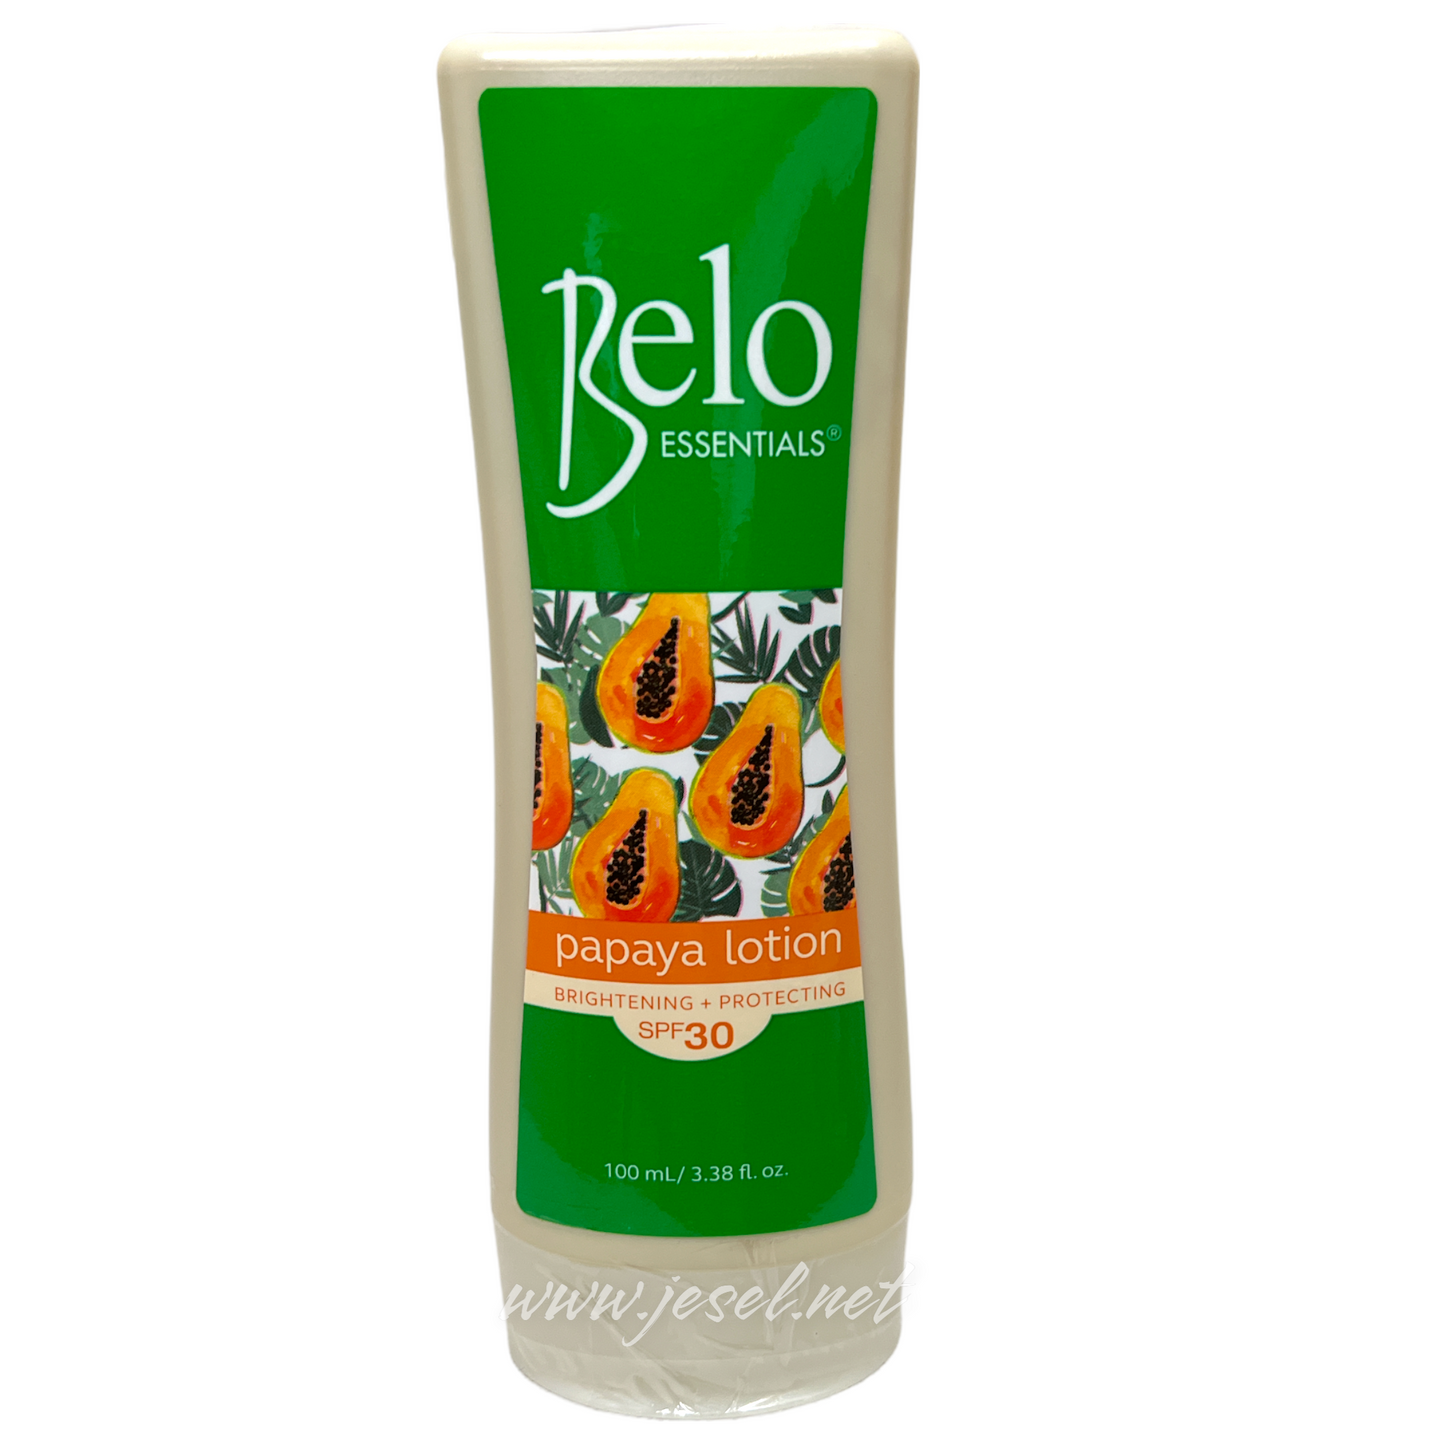 Belo Essentials Papaya Lotion with SPF 30 100ml(3.38 oz)